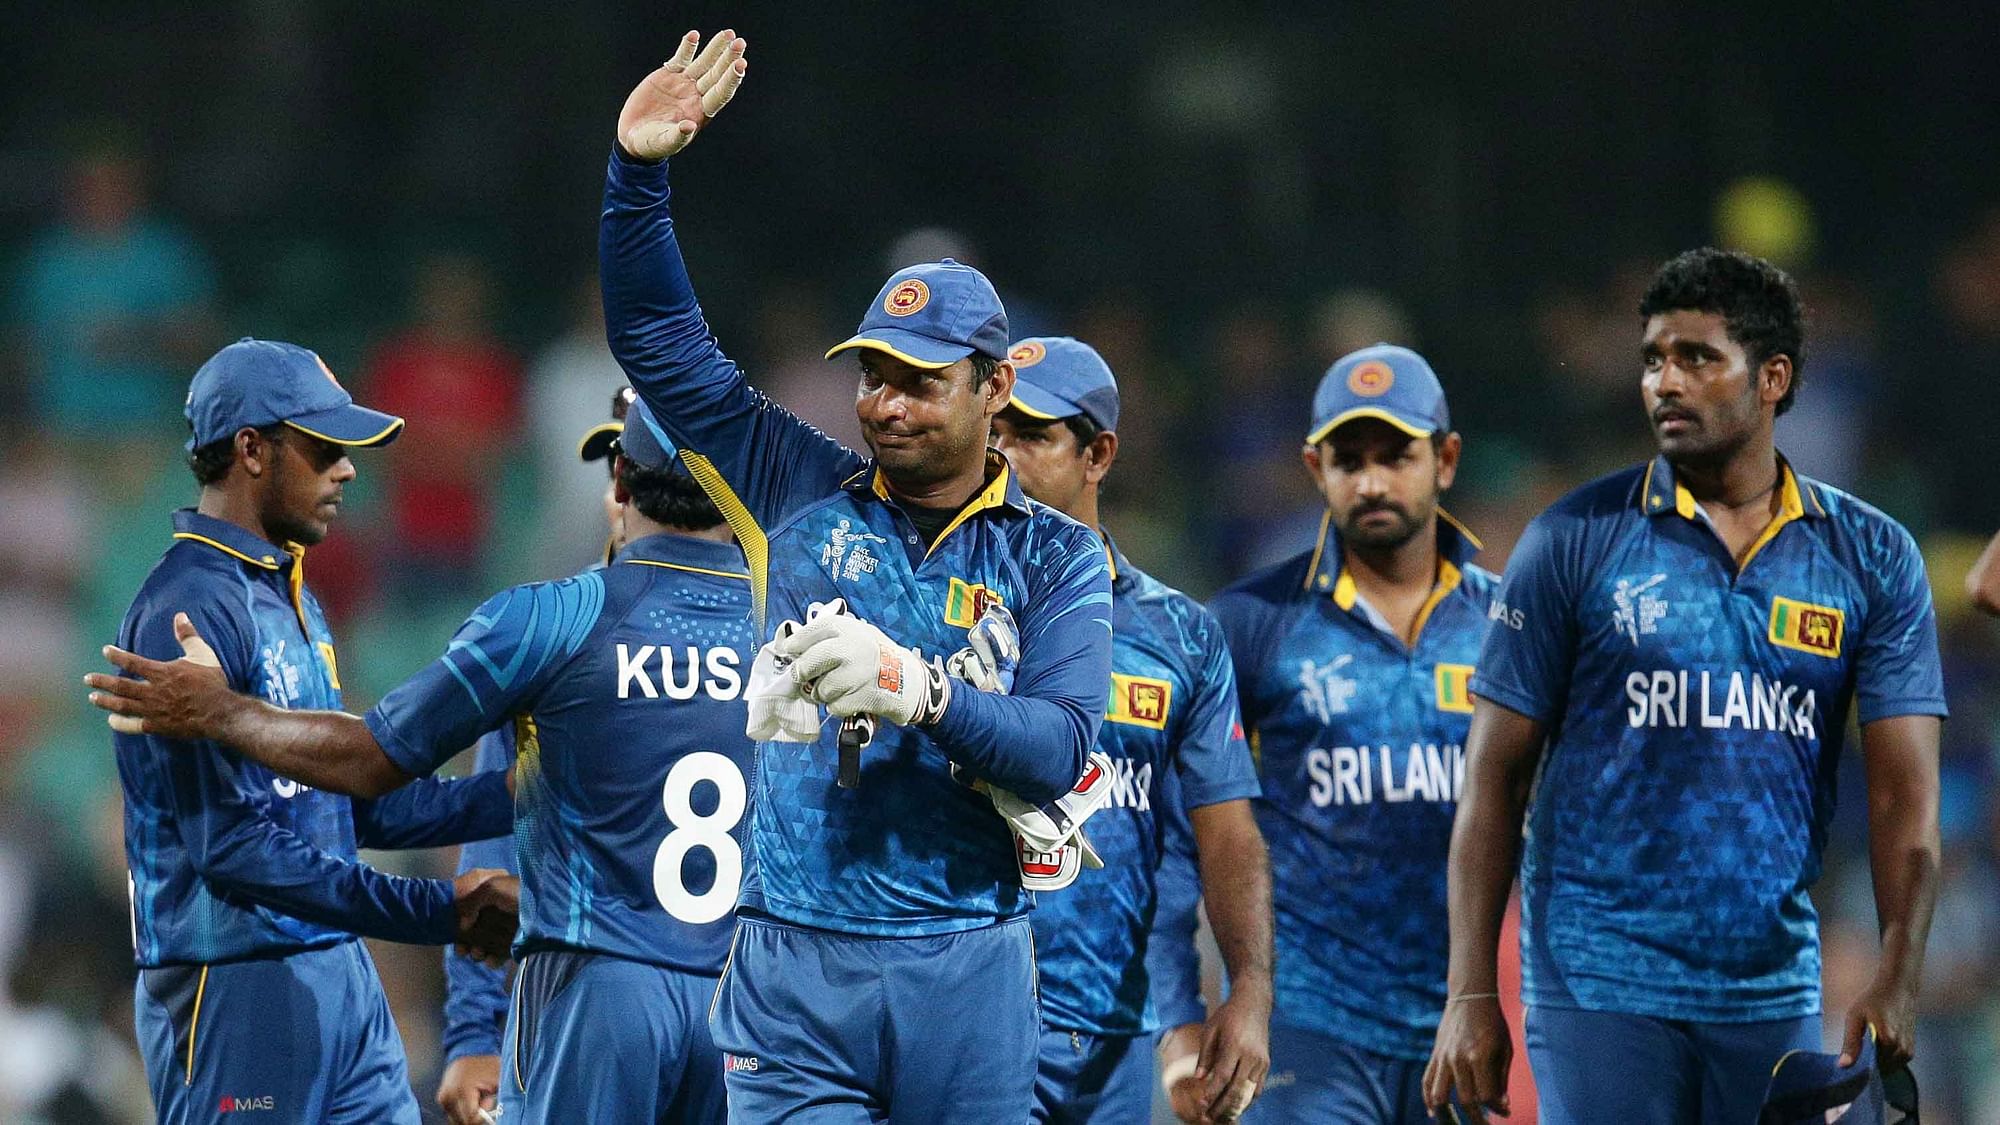 File picture of Kumar Sangakkara with the Sri Lankan cricket team. (Photo: AP)